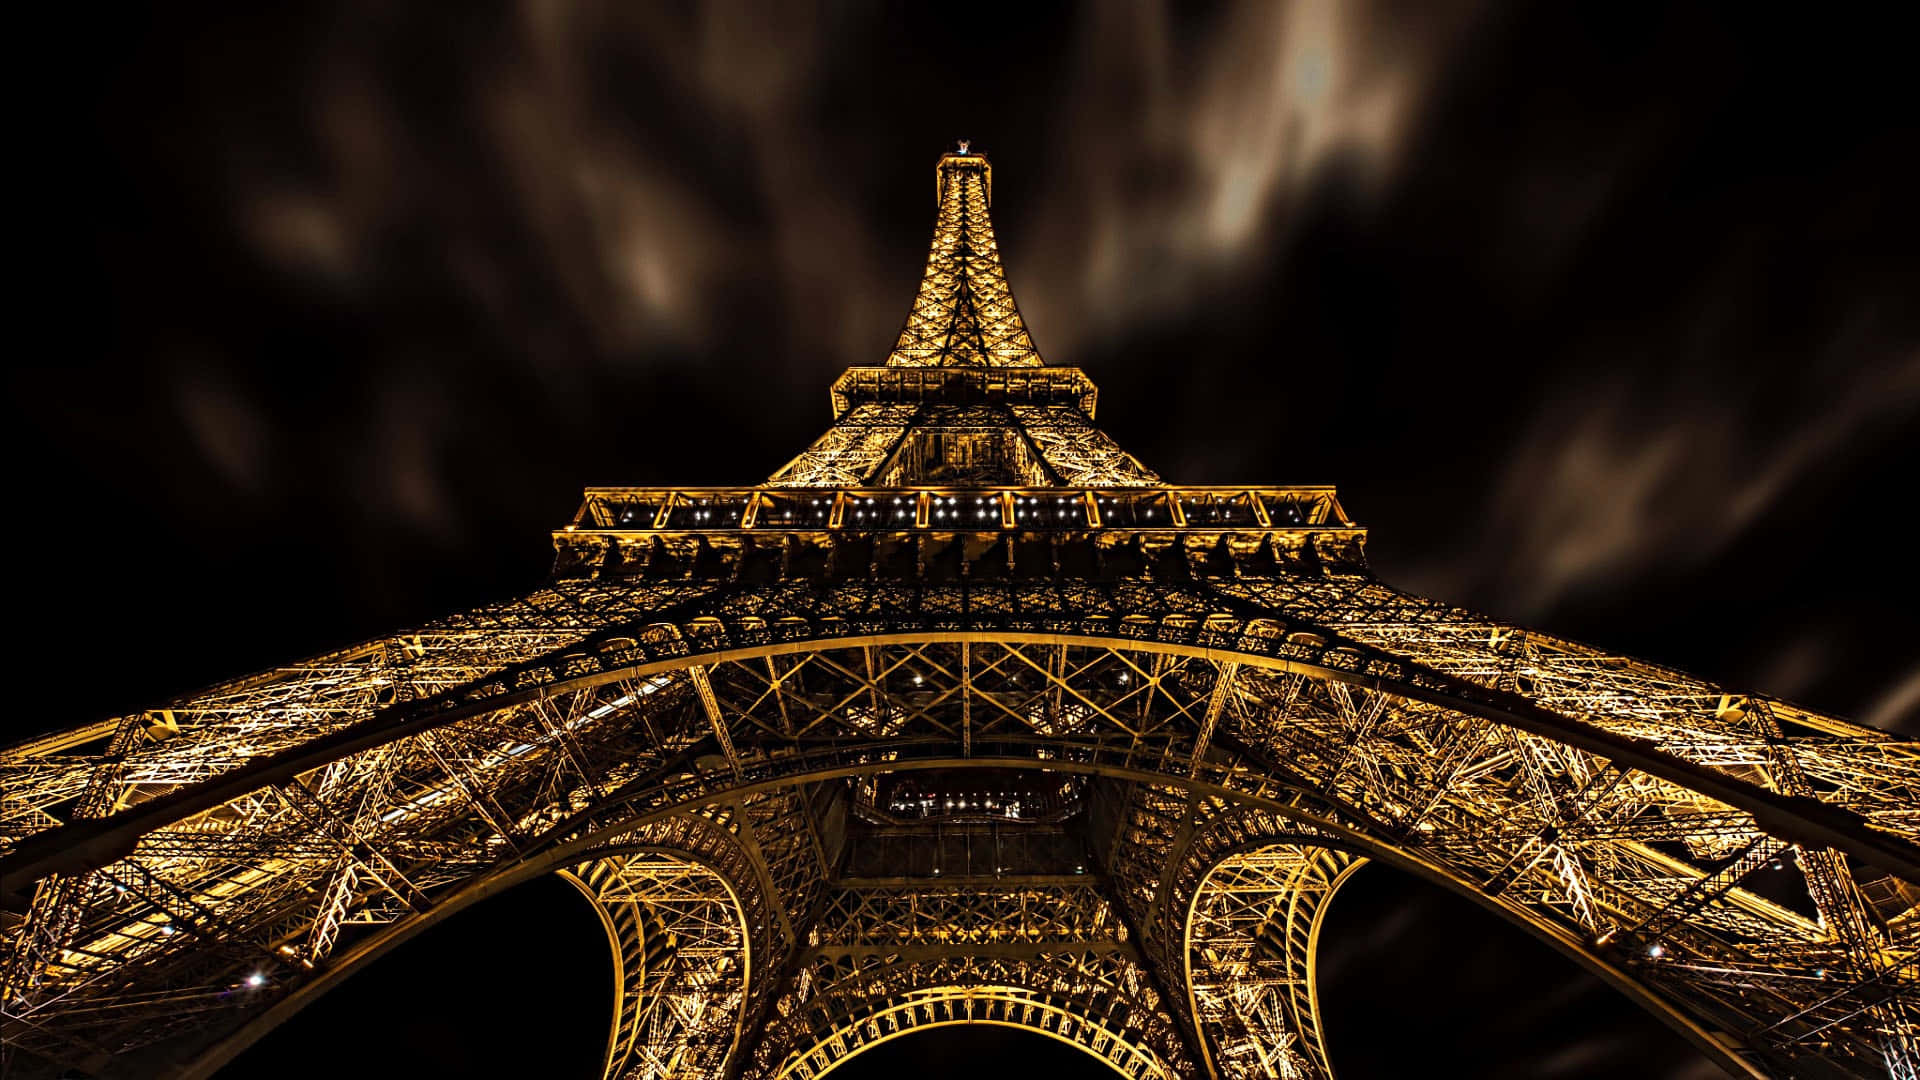 "Romance Under the Eiffel Tower"